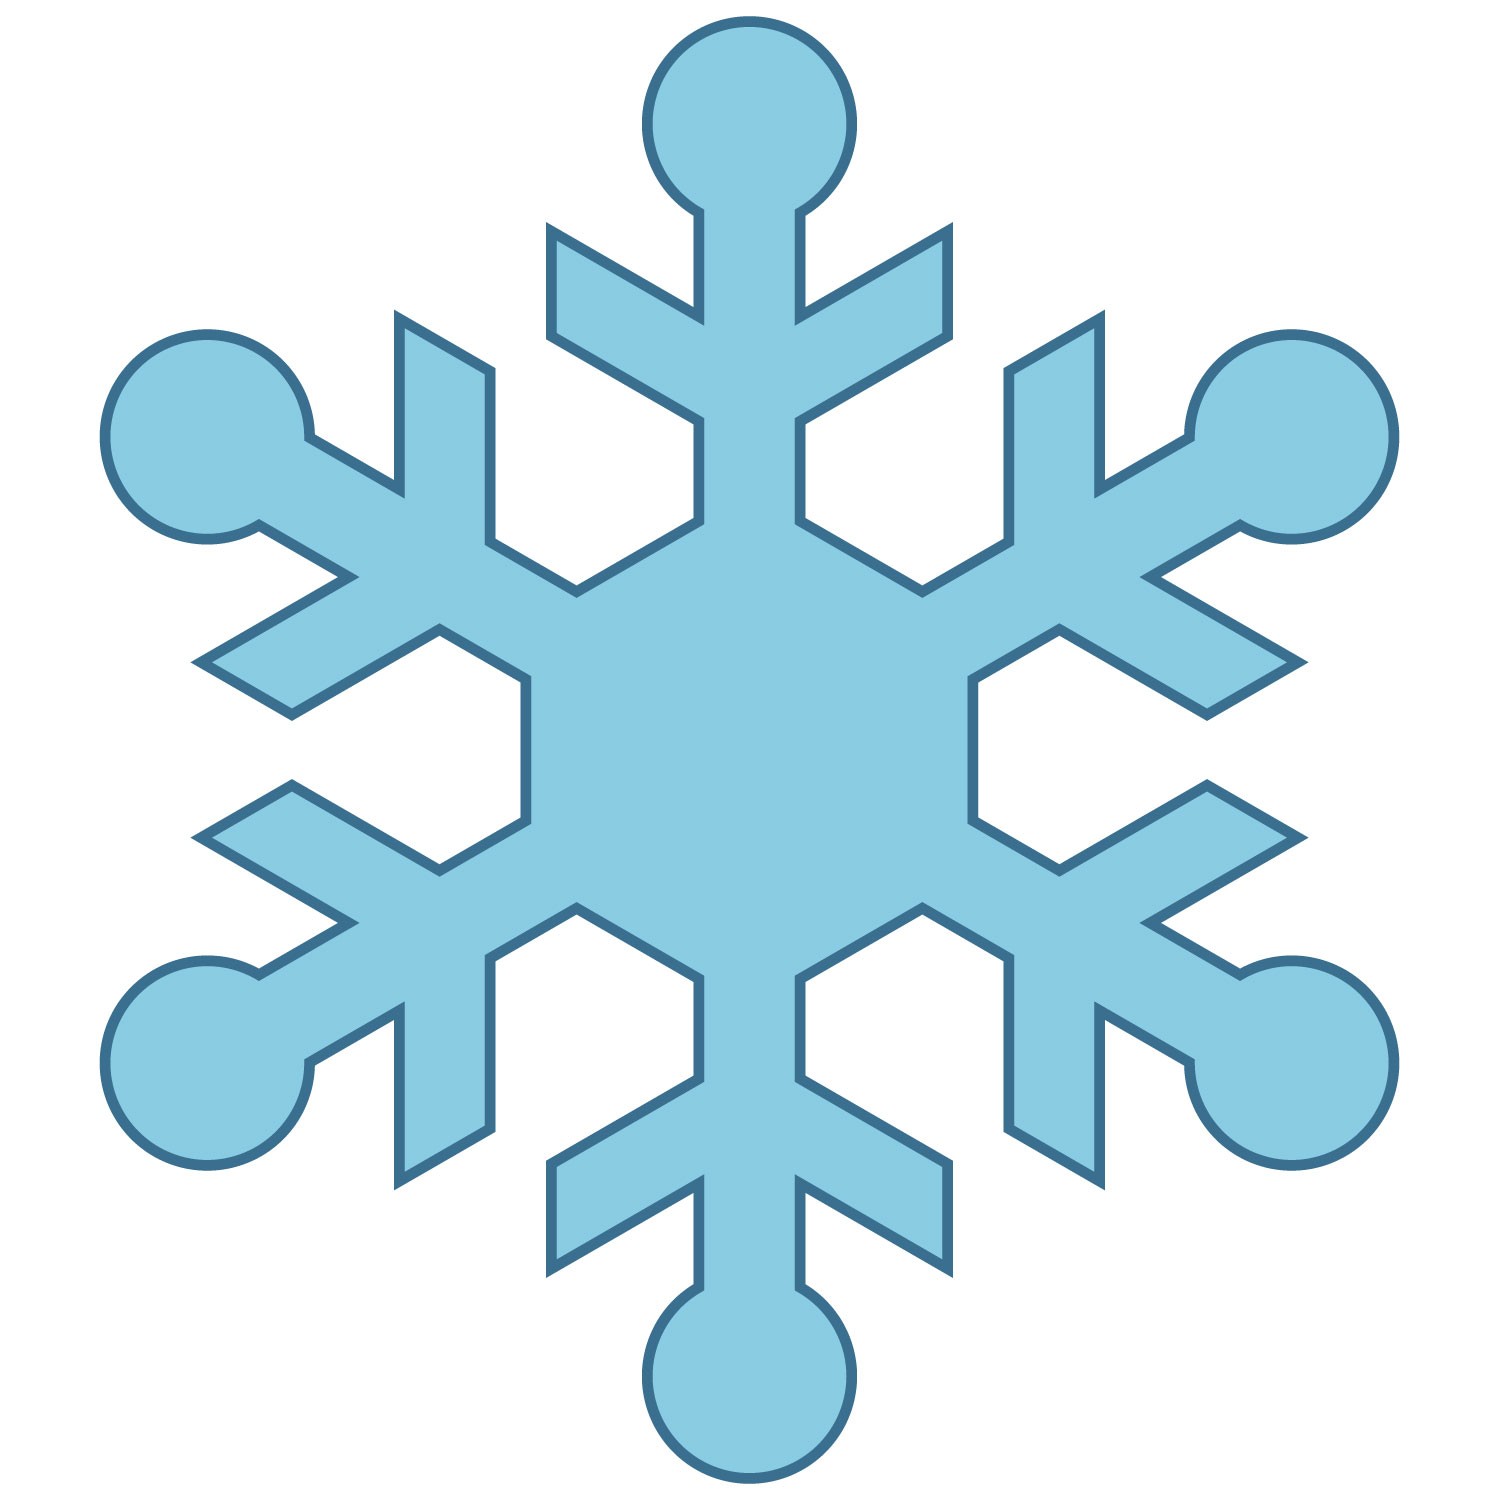 4041 Snowflakes free clipart.